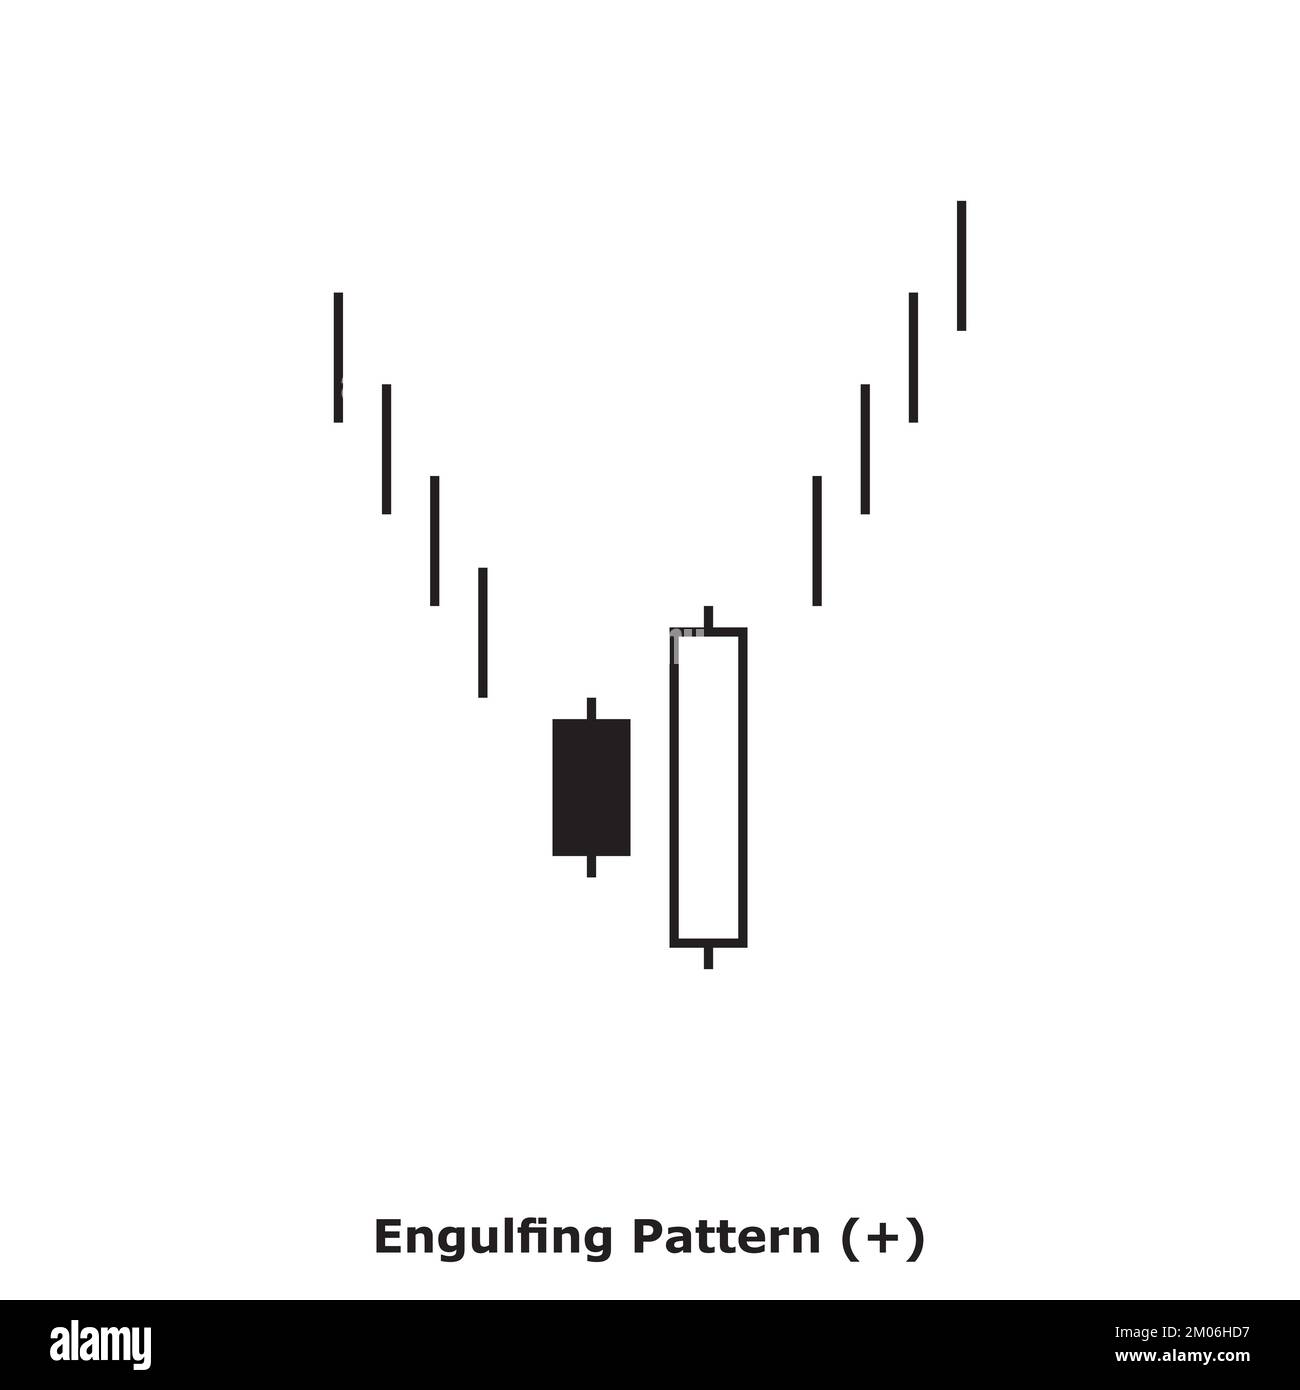 Engulfing Pattern - Bullish - White & Black - Square - Bullish Reversal Japanese Candlestick Pattern - Double Patterns Stock Vector